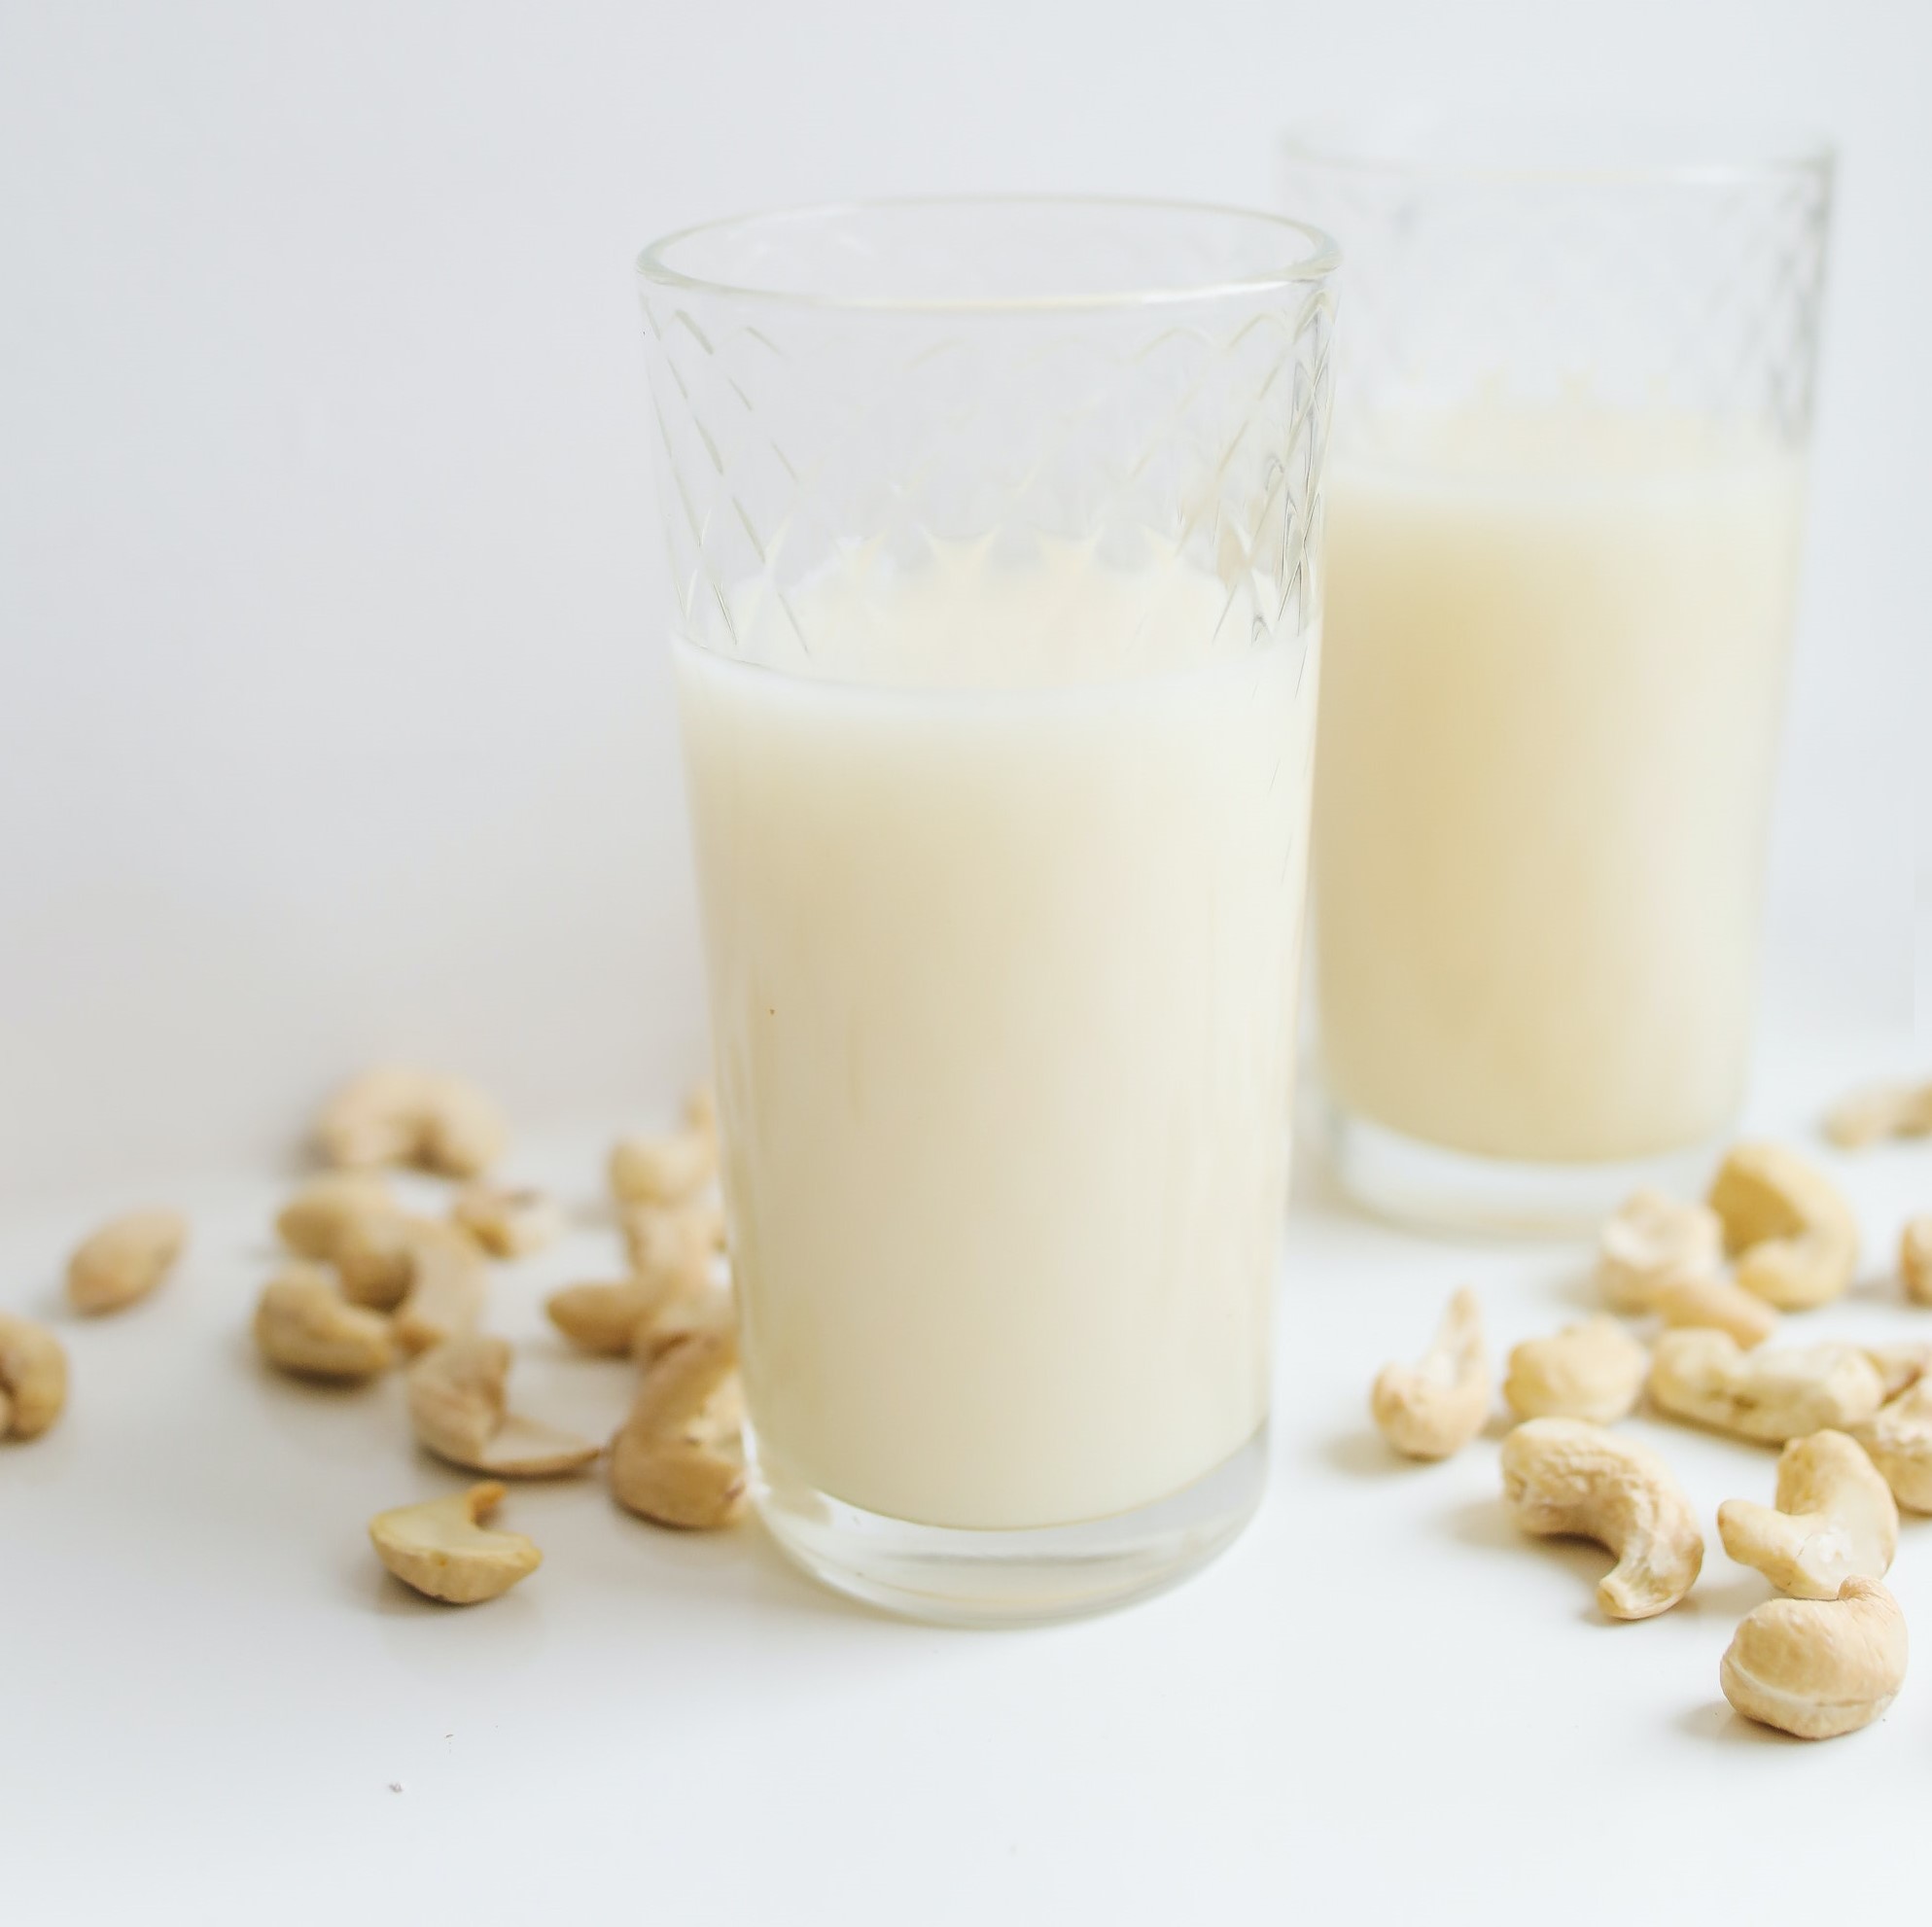 cashew milk market sustainable alternative